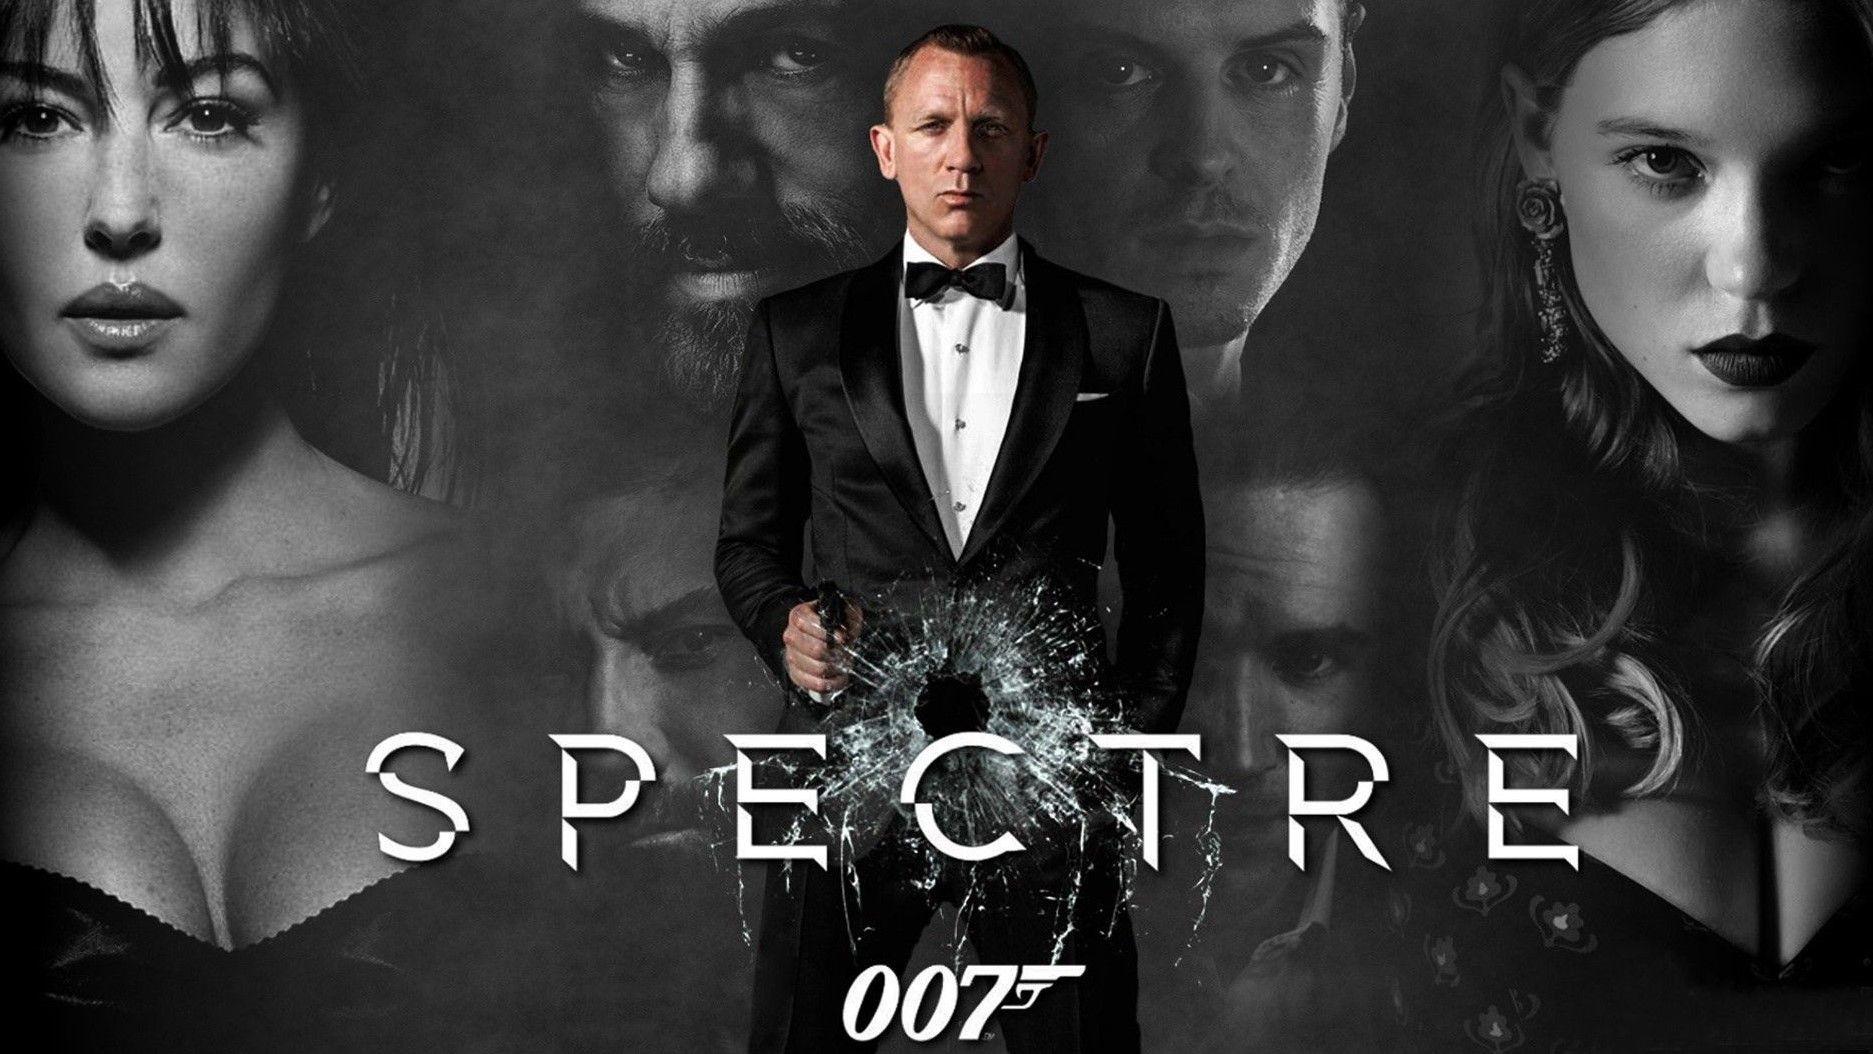 Best James Bond 007 HD Wallpaper Picture Background Image